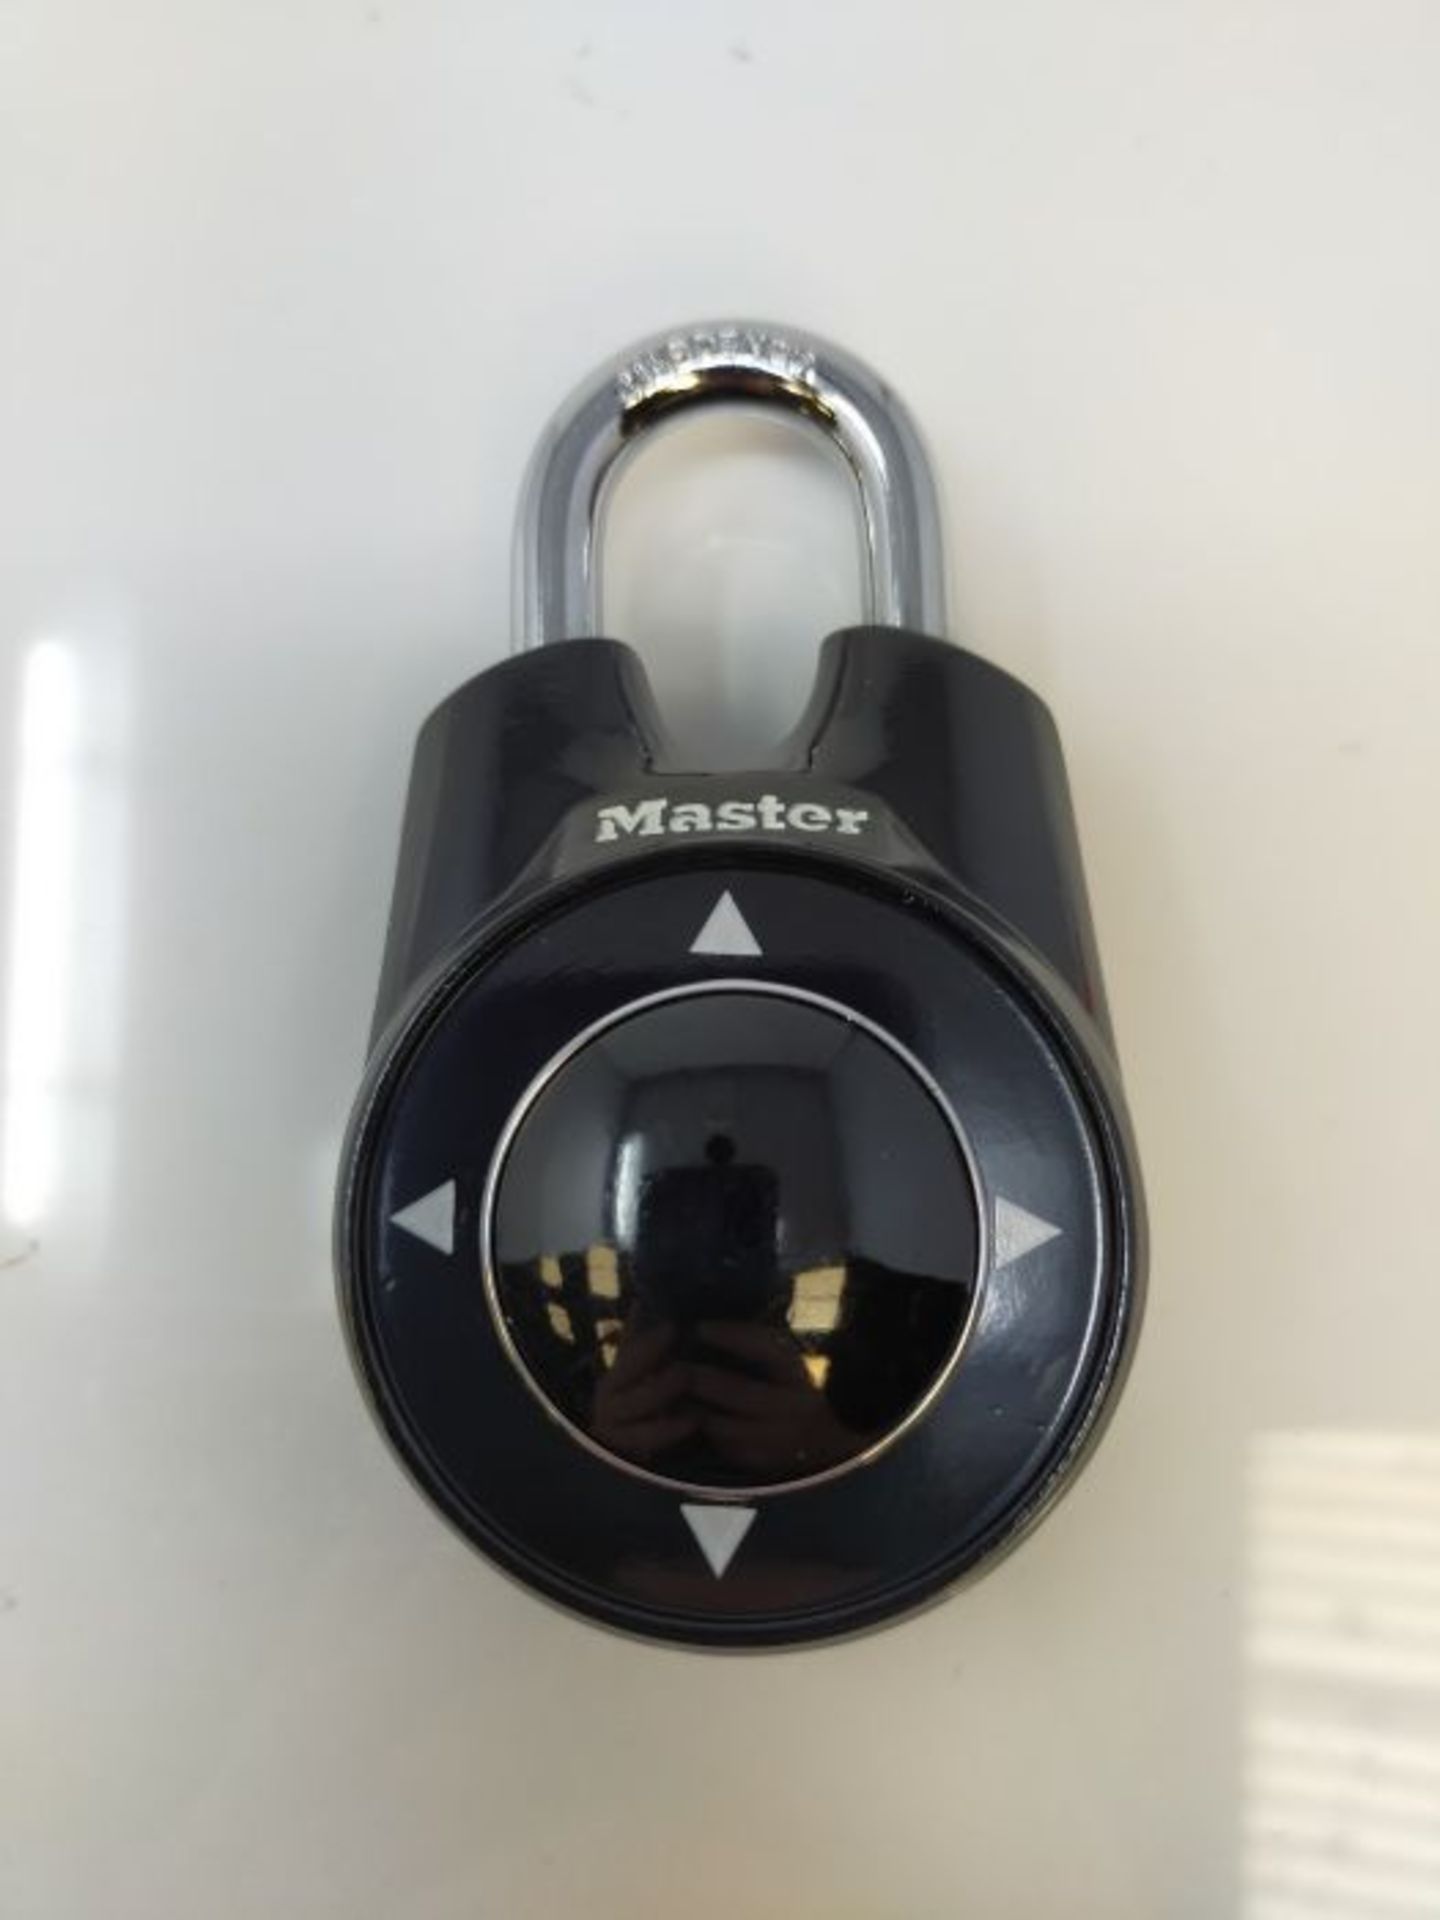 Master Lock Padlock, One Directional Combination Lock, Set Your Own Combination Locker - Image 2 of 3